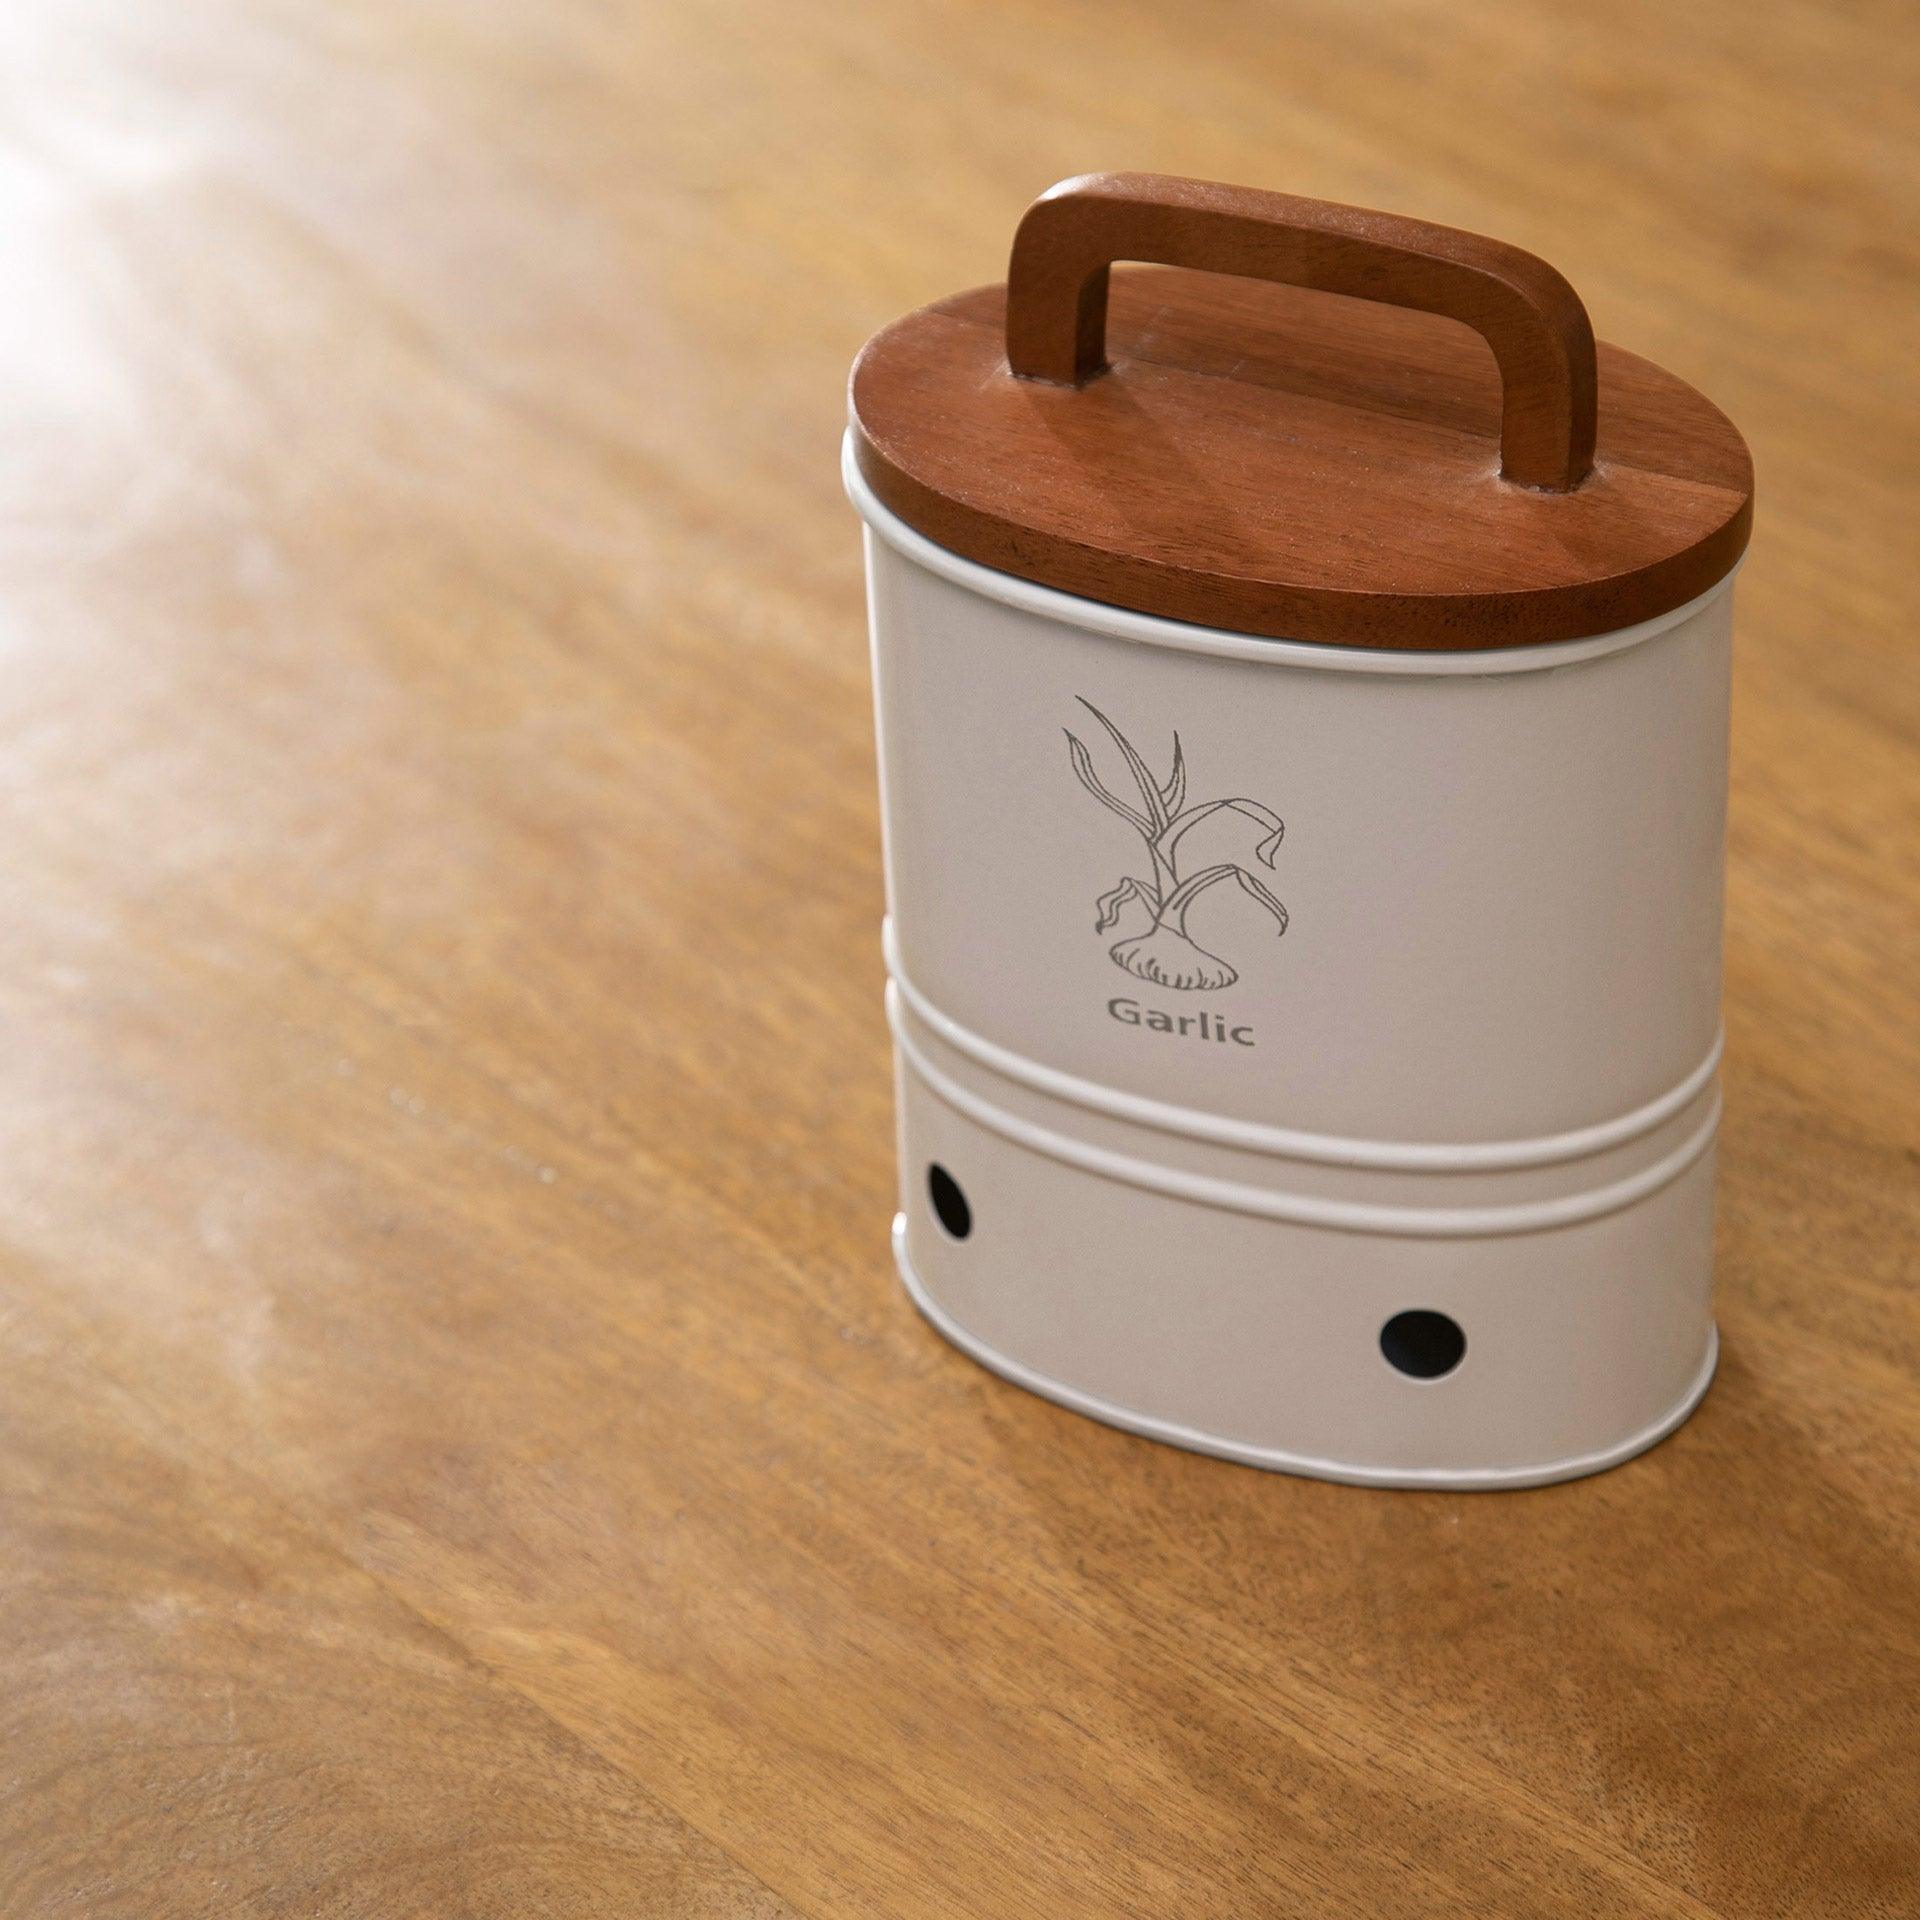 Canny garlic storage barrel with wooden lid